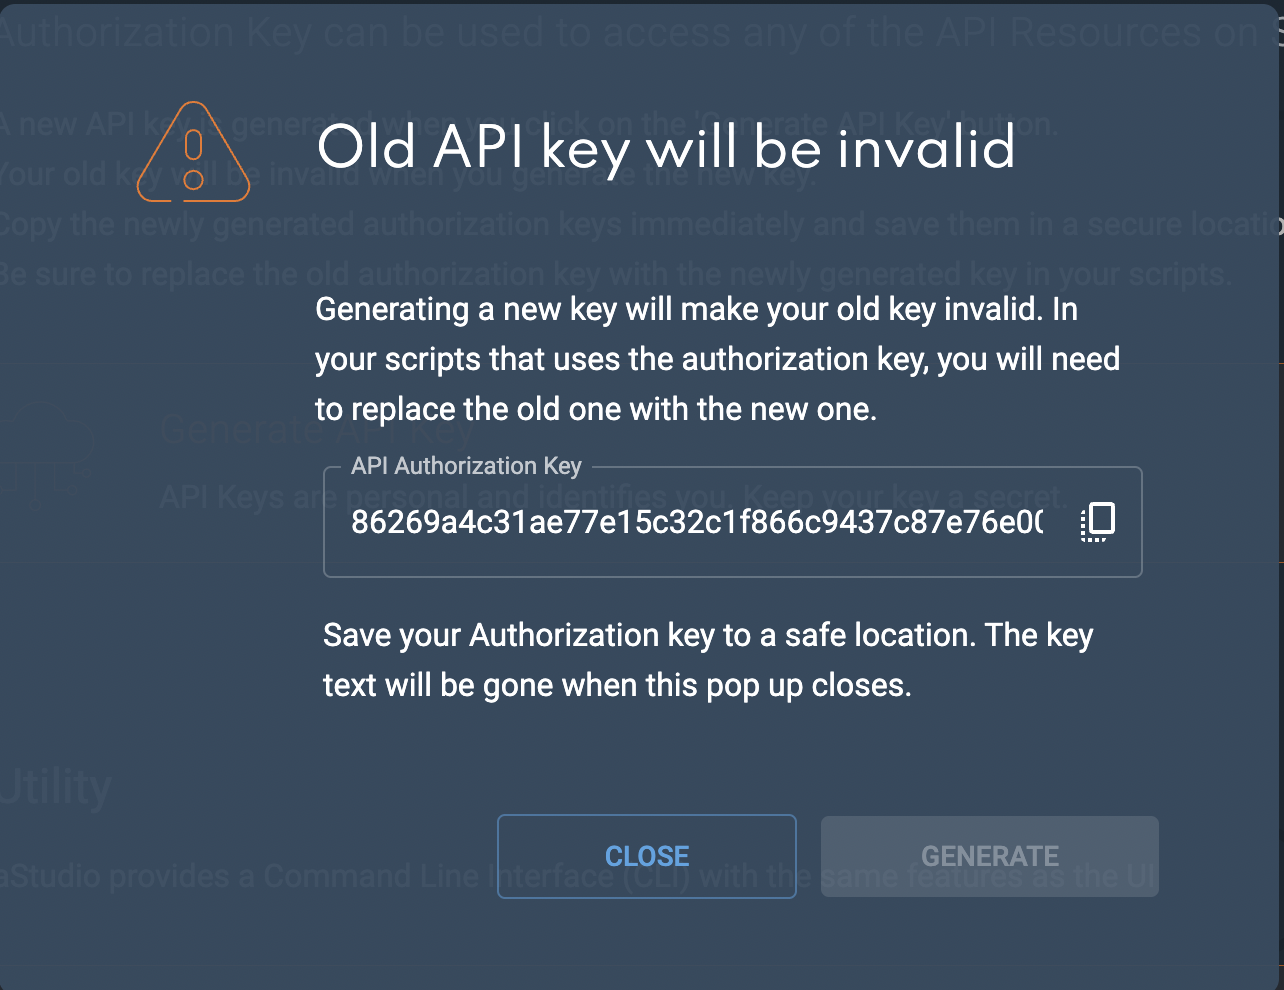 copy API key